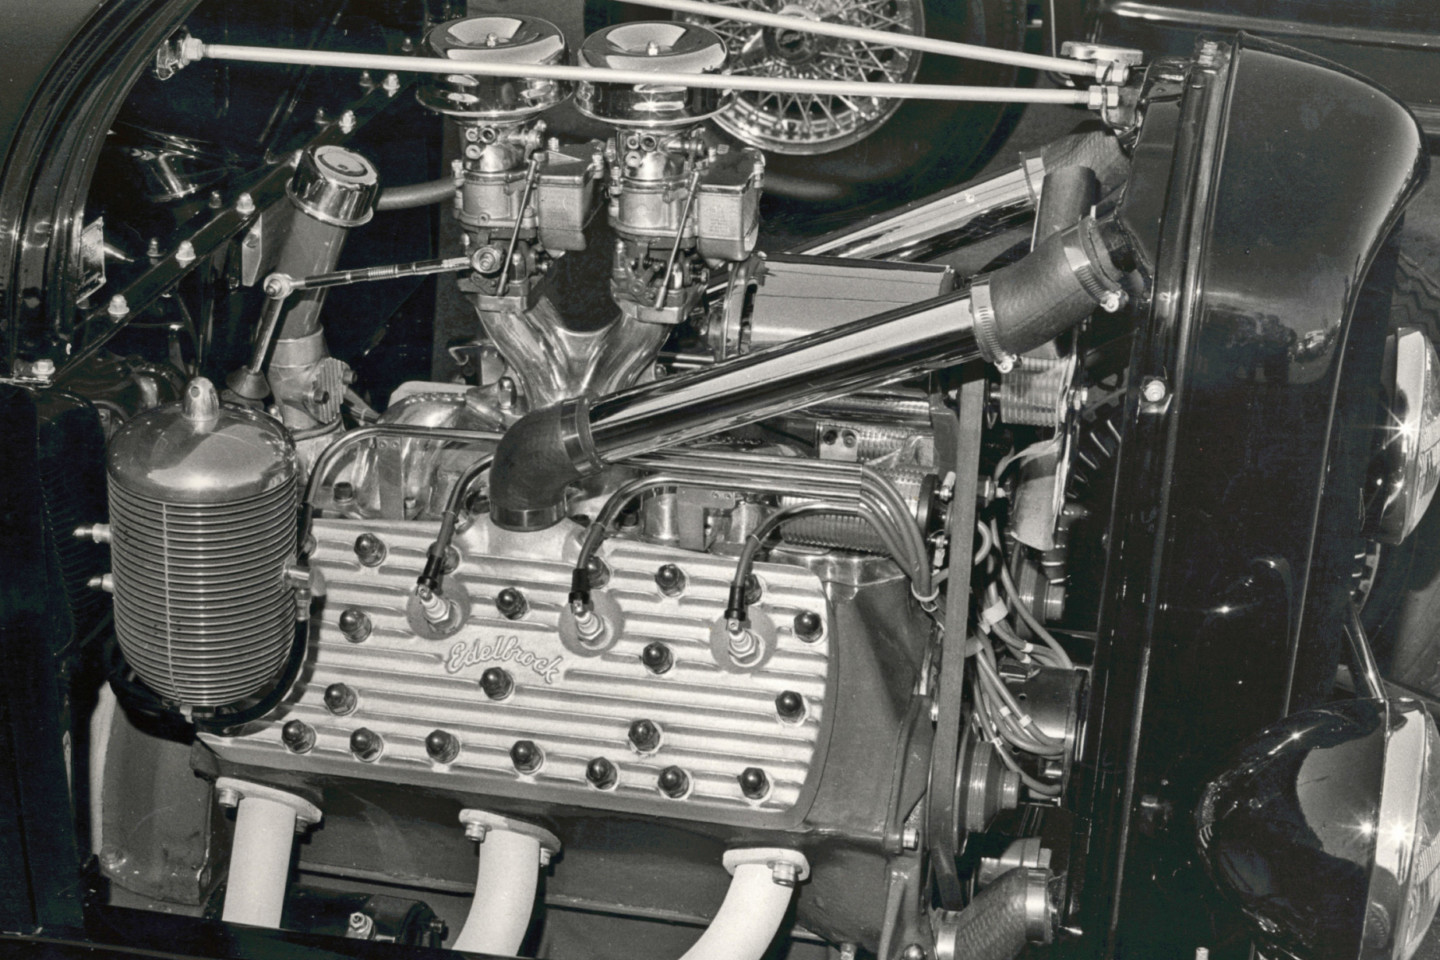 Flathead Ford V-8 and Slingshot intake manifold